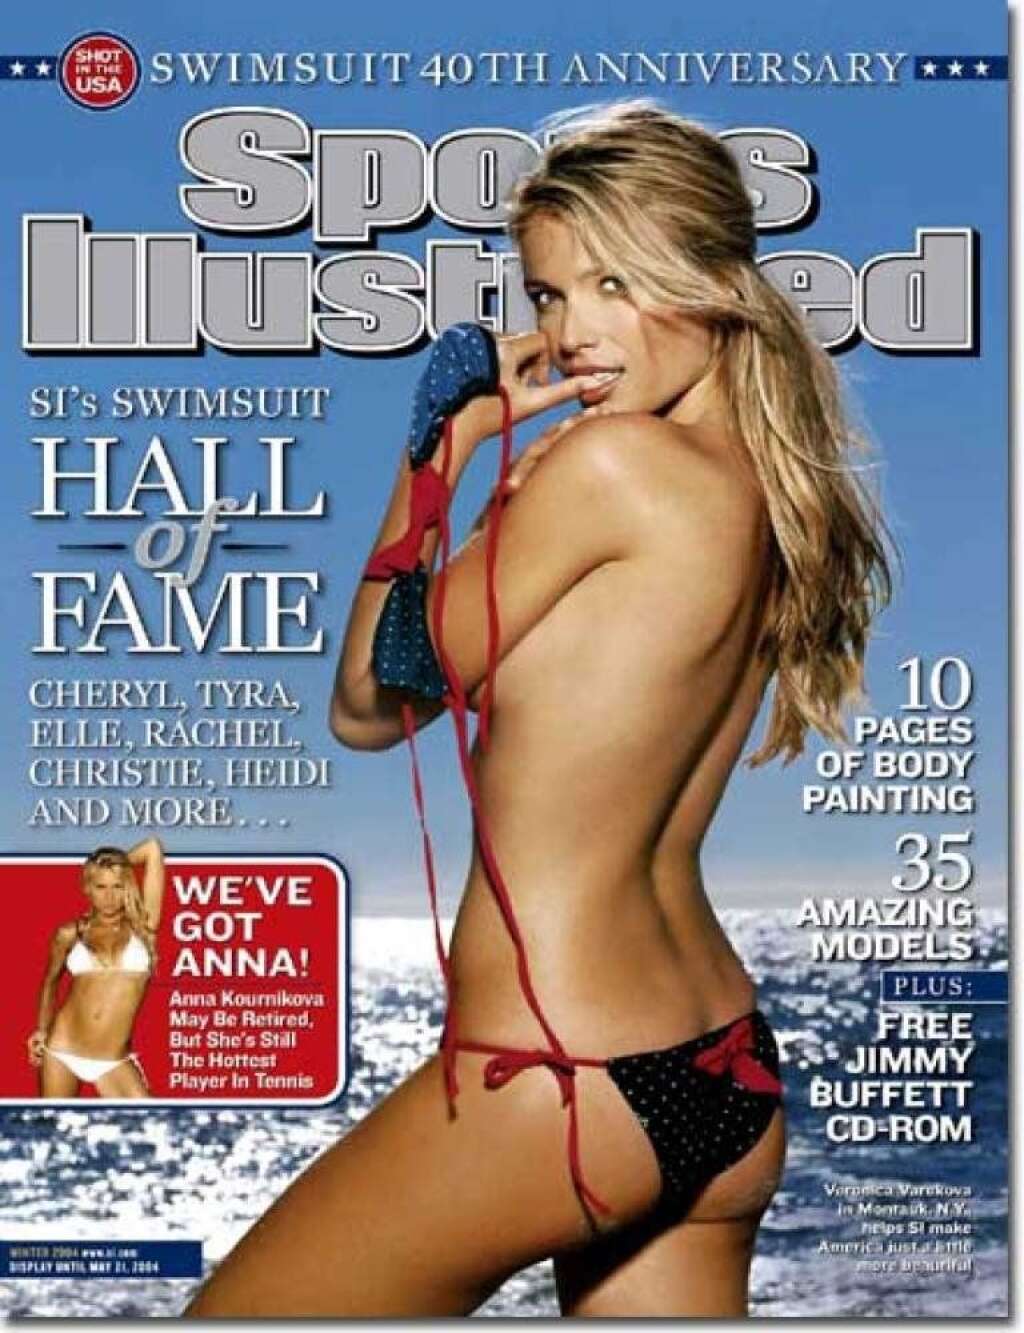 2004: Veronica Varekova - (Sports Illustrated)